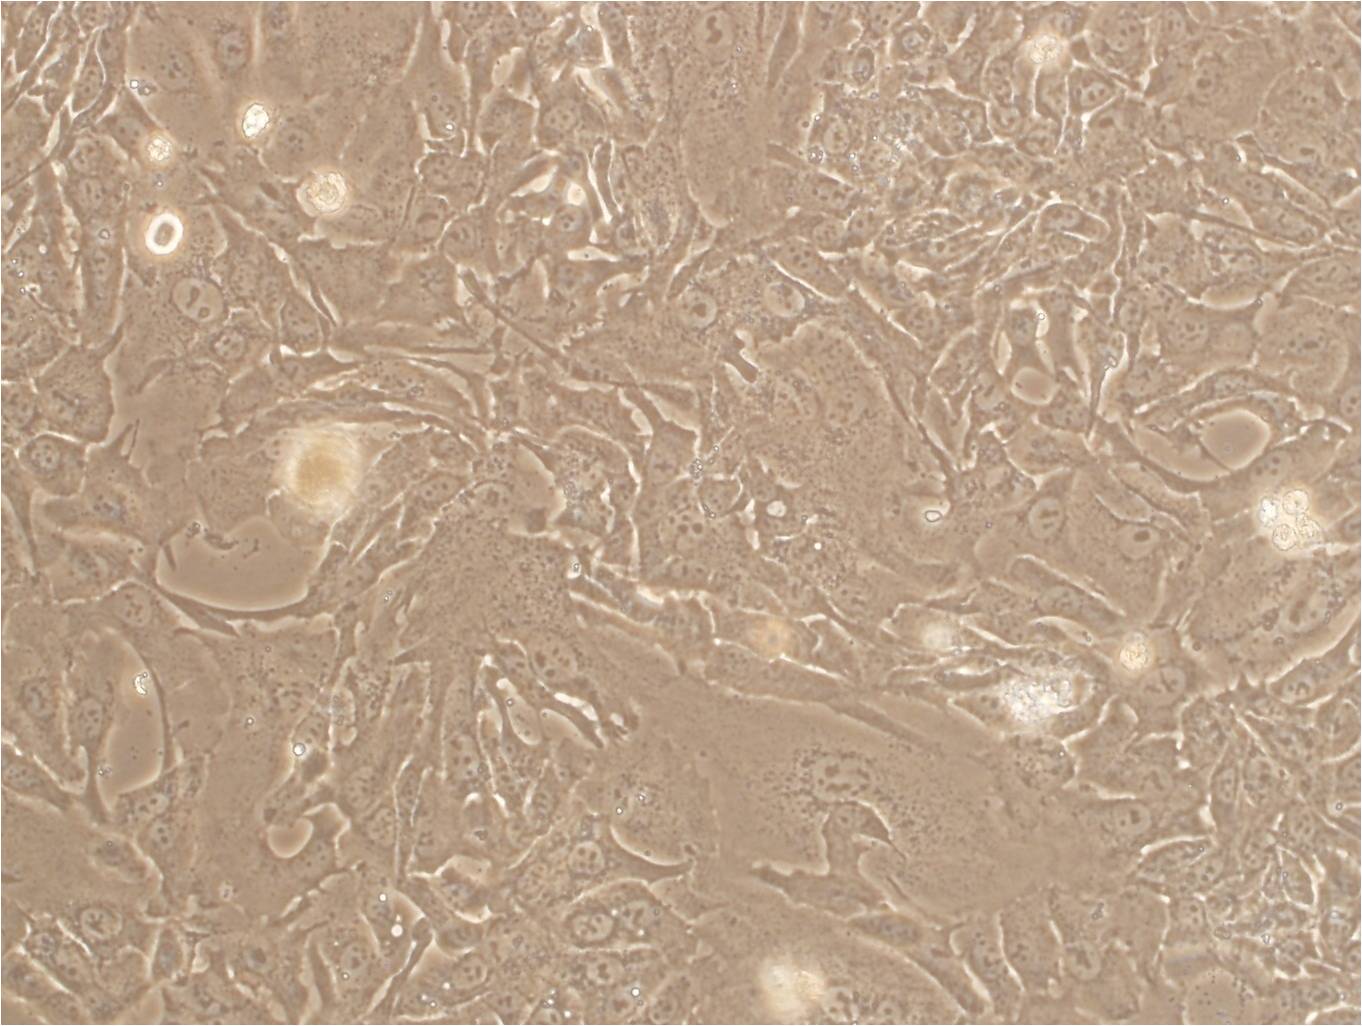 BC-027 Cells(赠送Str鉴定报告)|人乳腺癌细胞